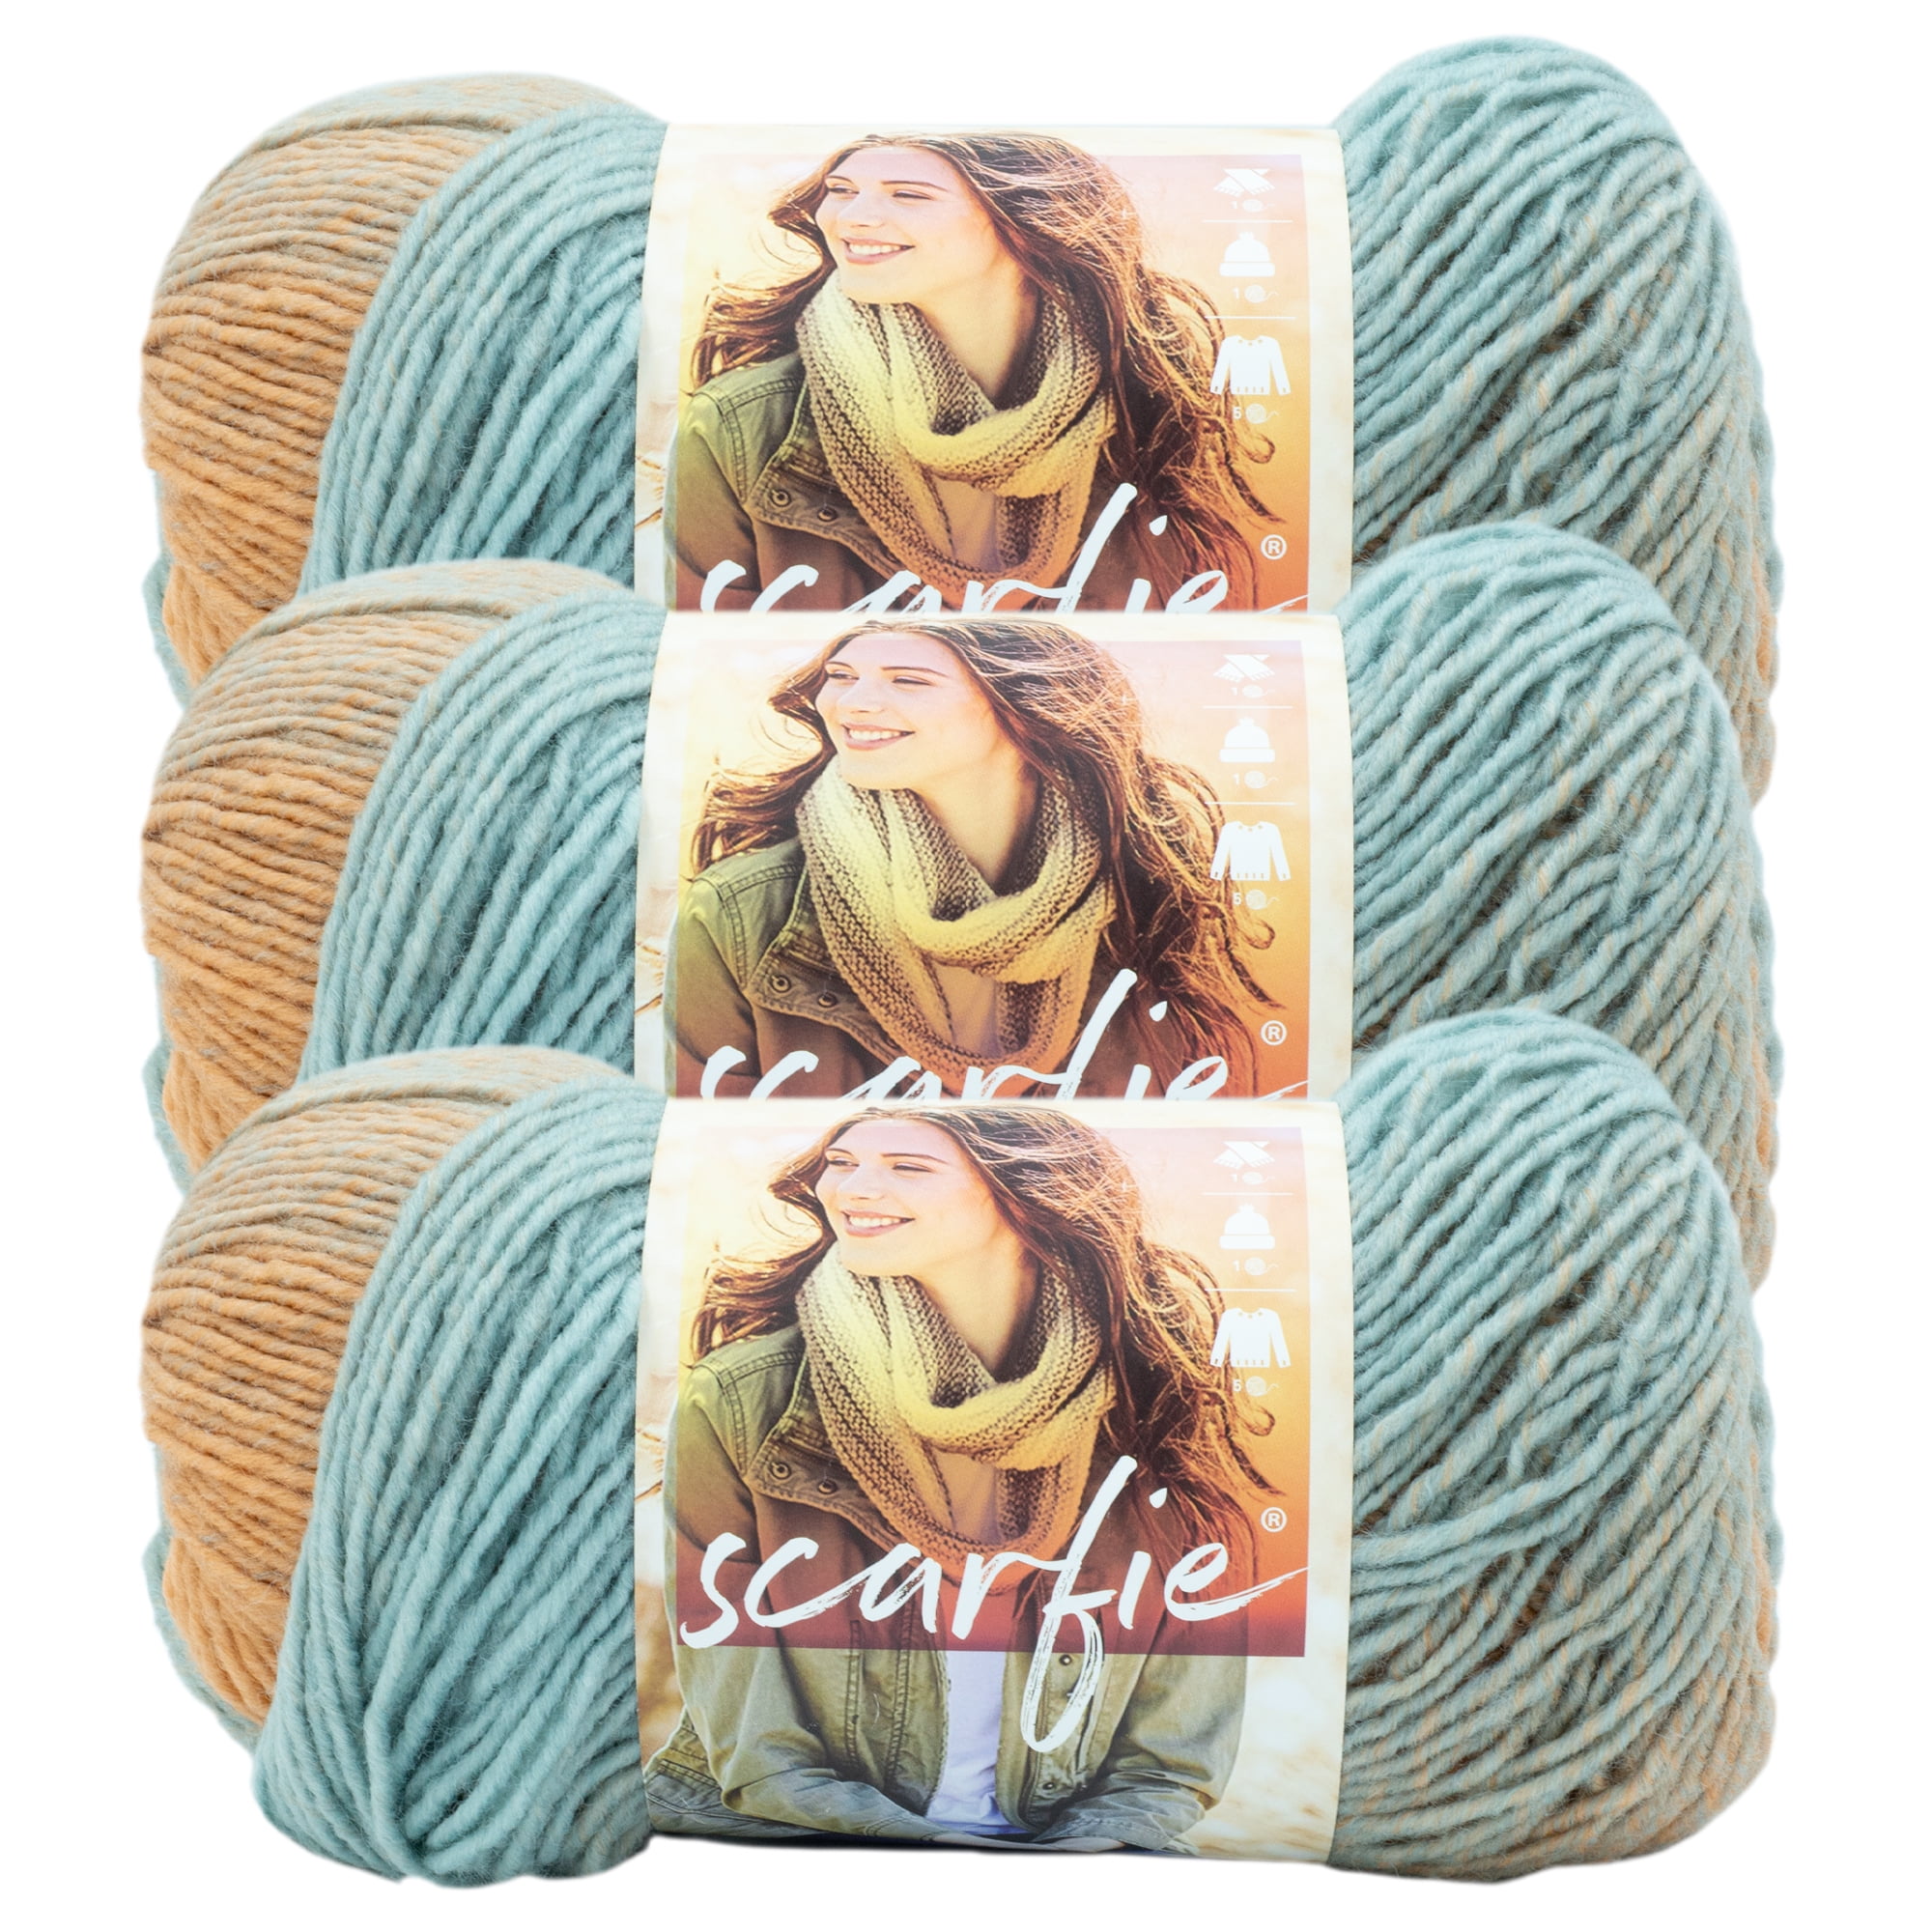 Lion Brand Scarfie Yarn - Cream Teal